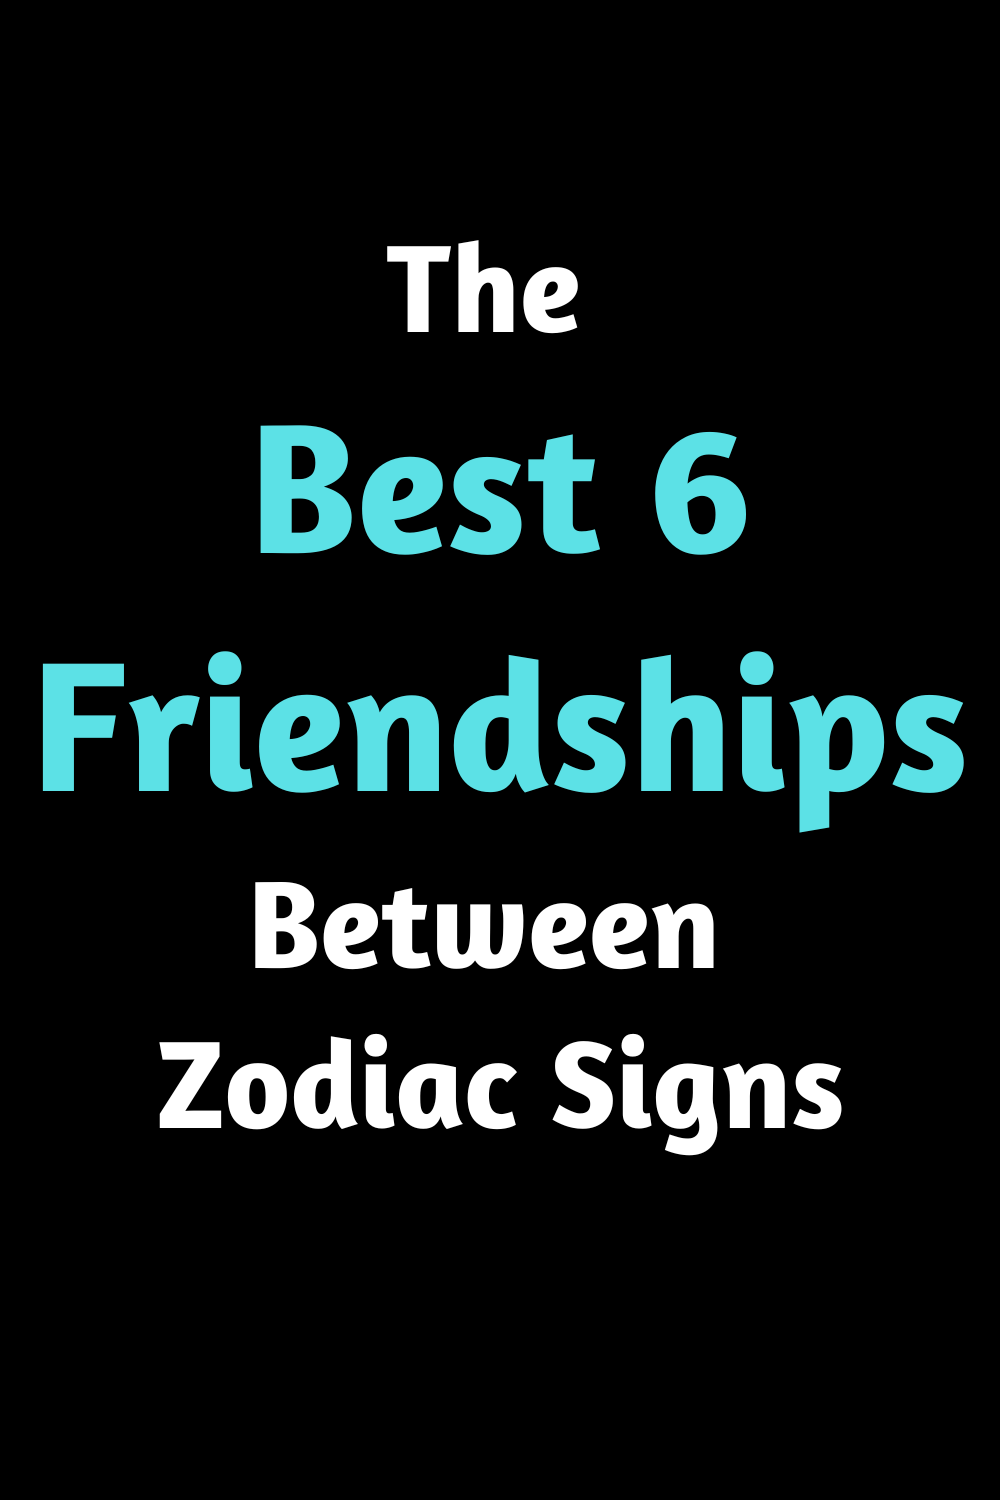 The Best 6 Friendships Between Zodiac Signs